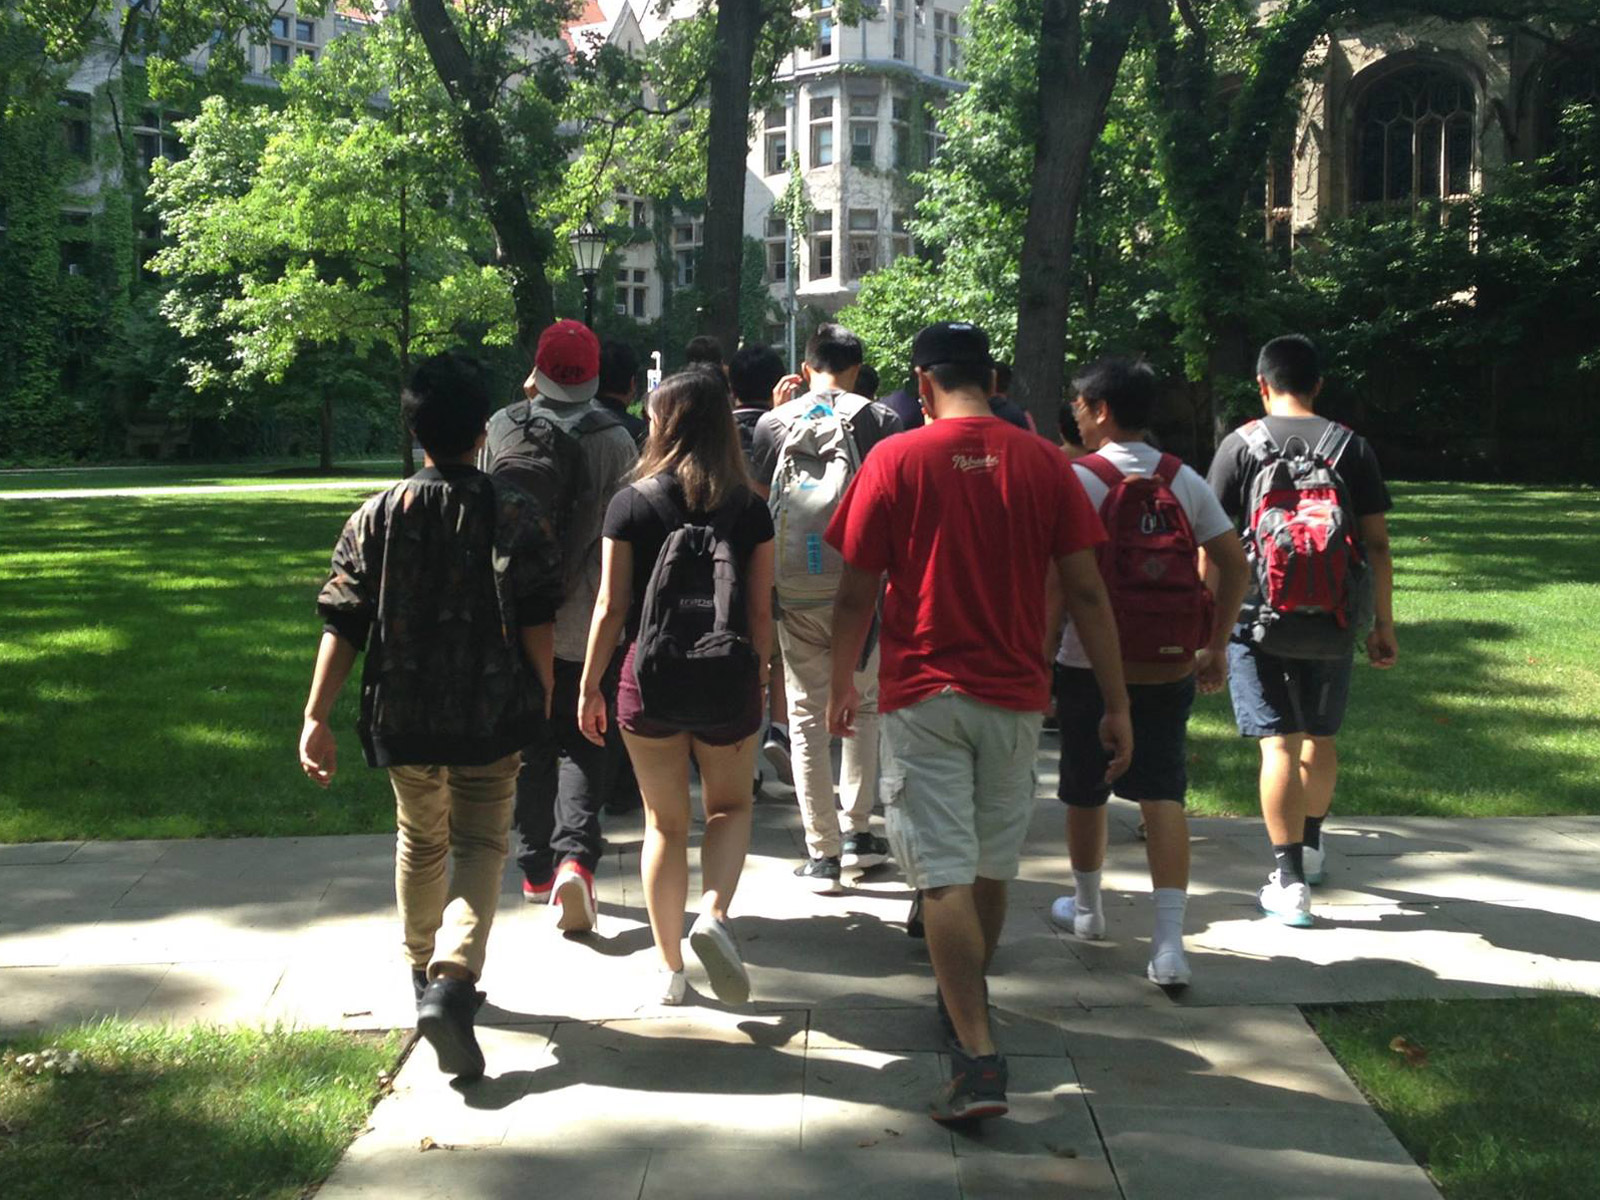 Students walk through a college campus